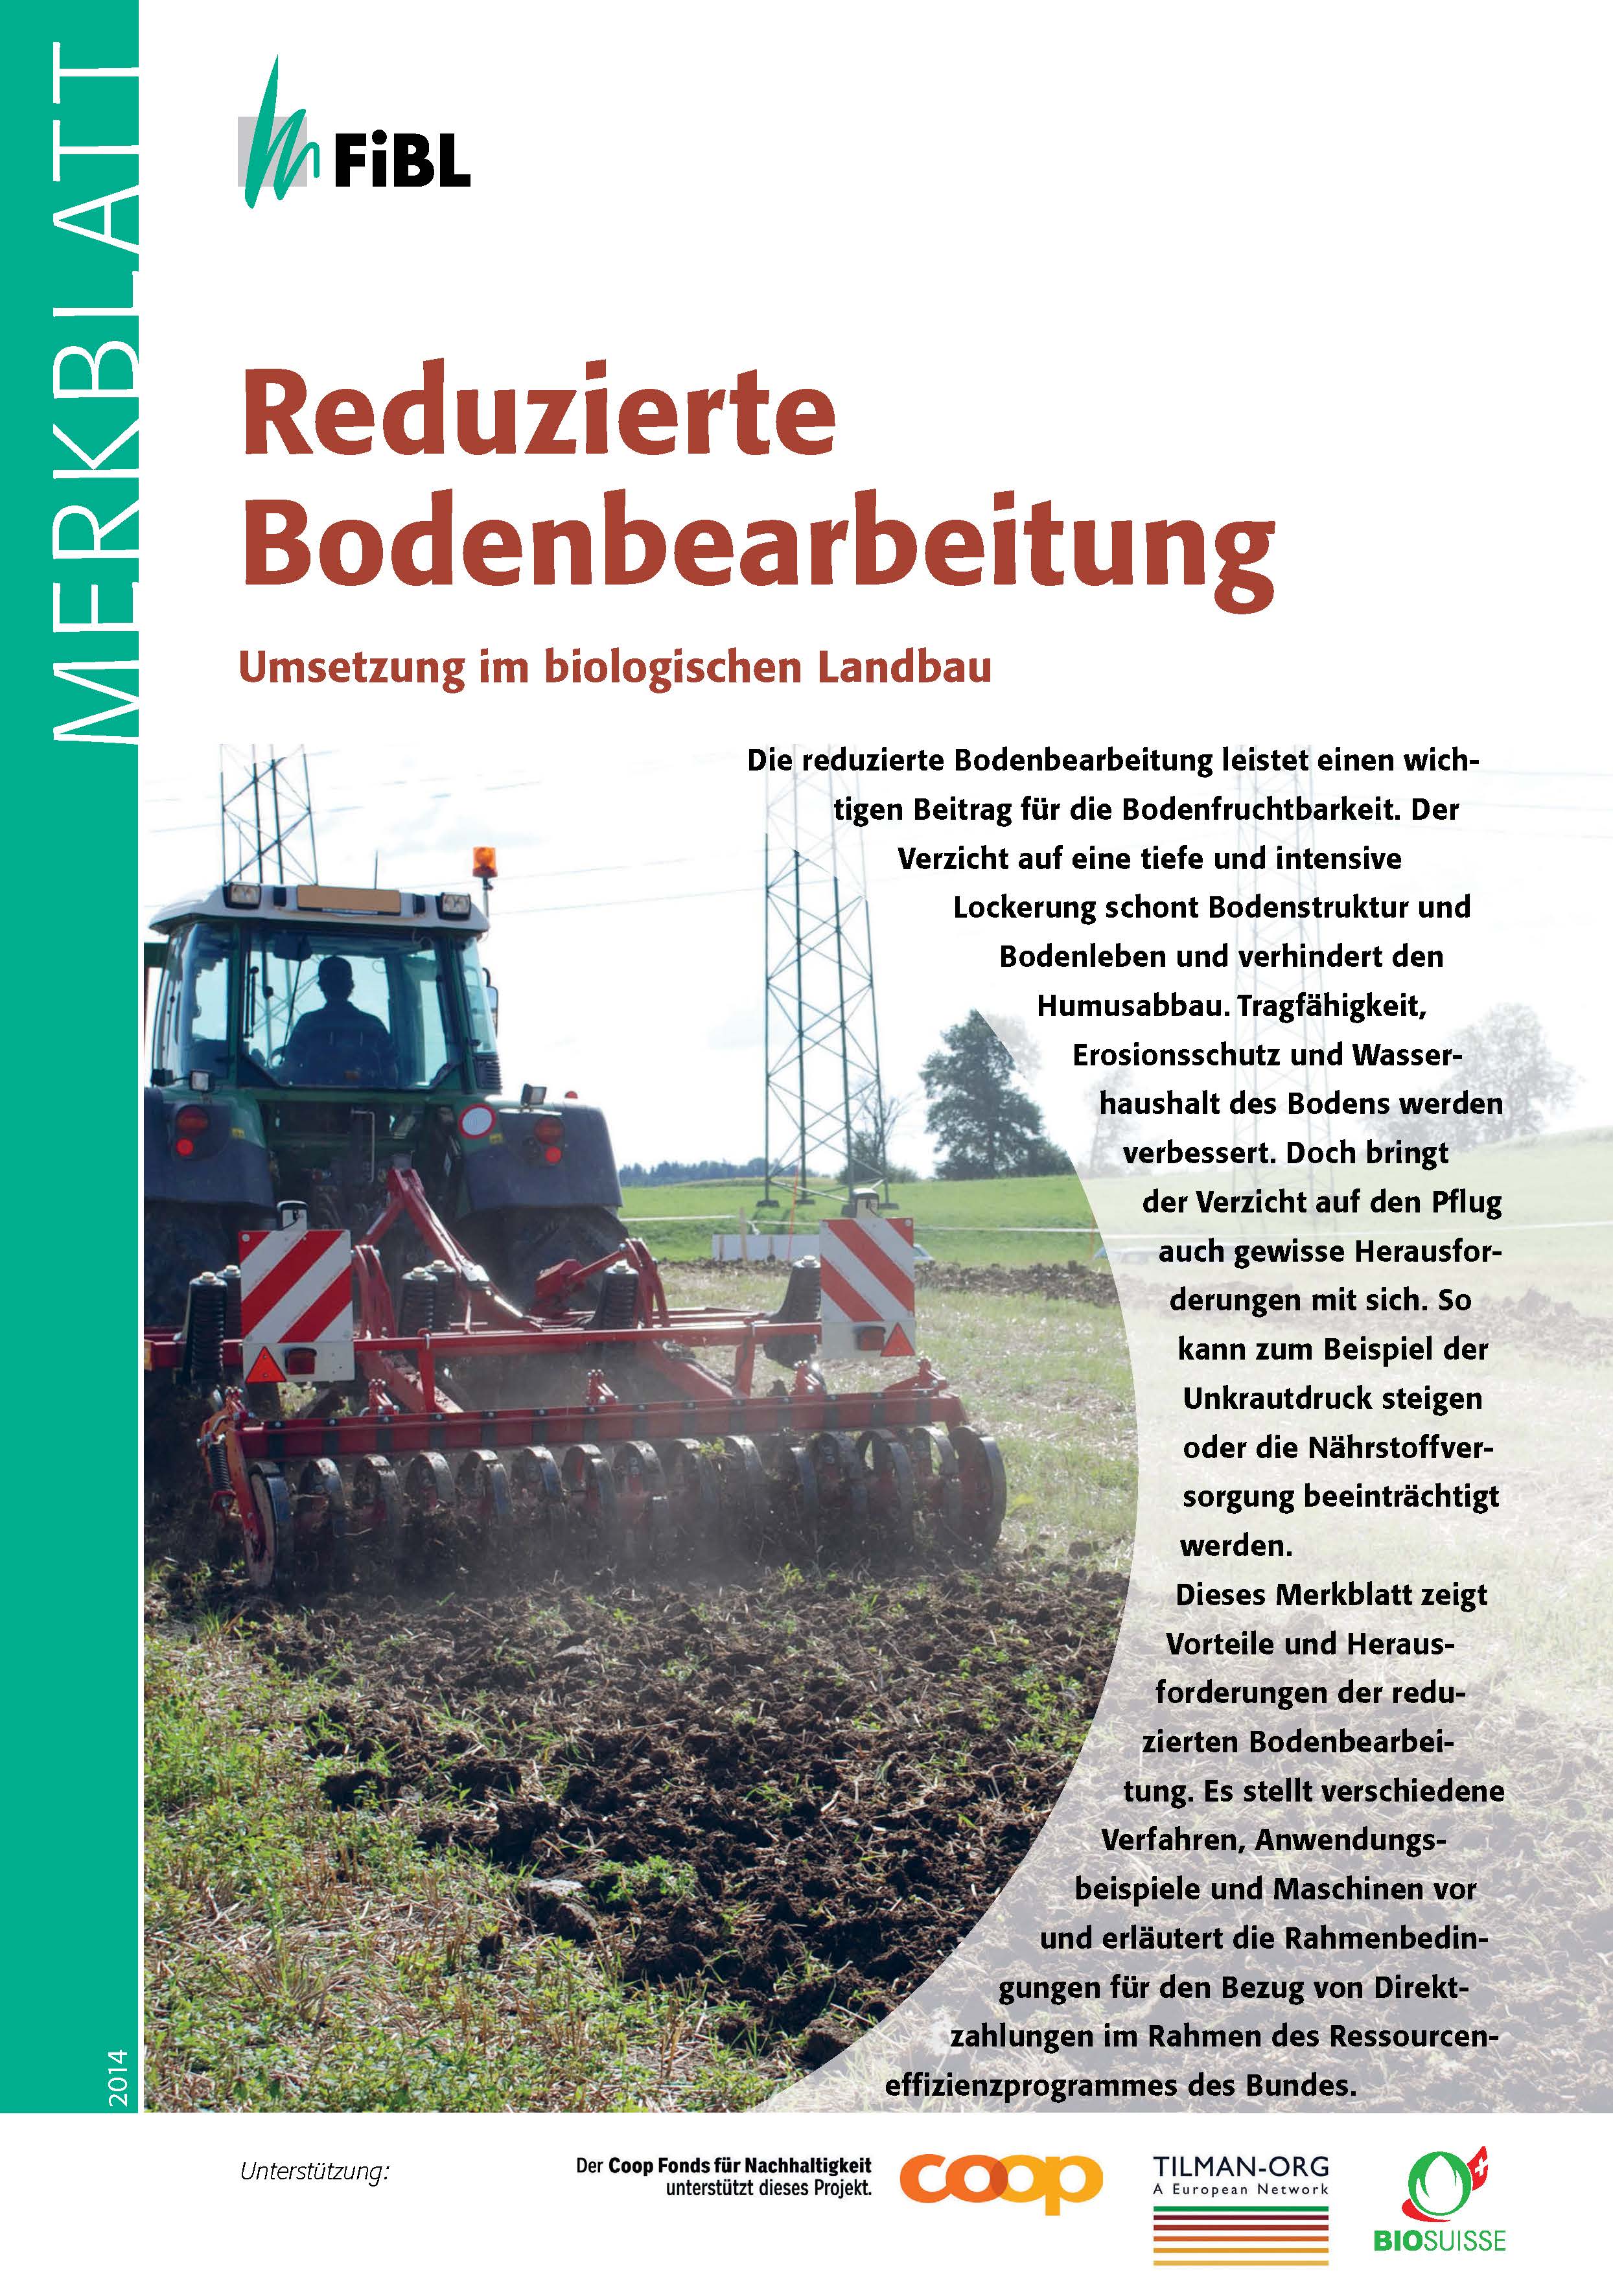 Reduceret jordbearbejdning (FiBL Factsheet)